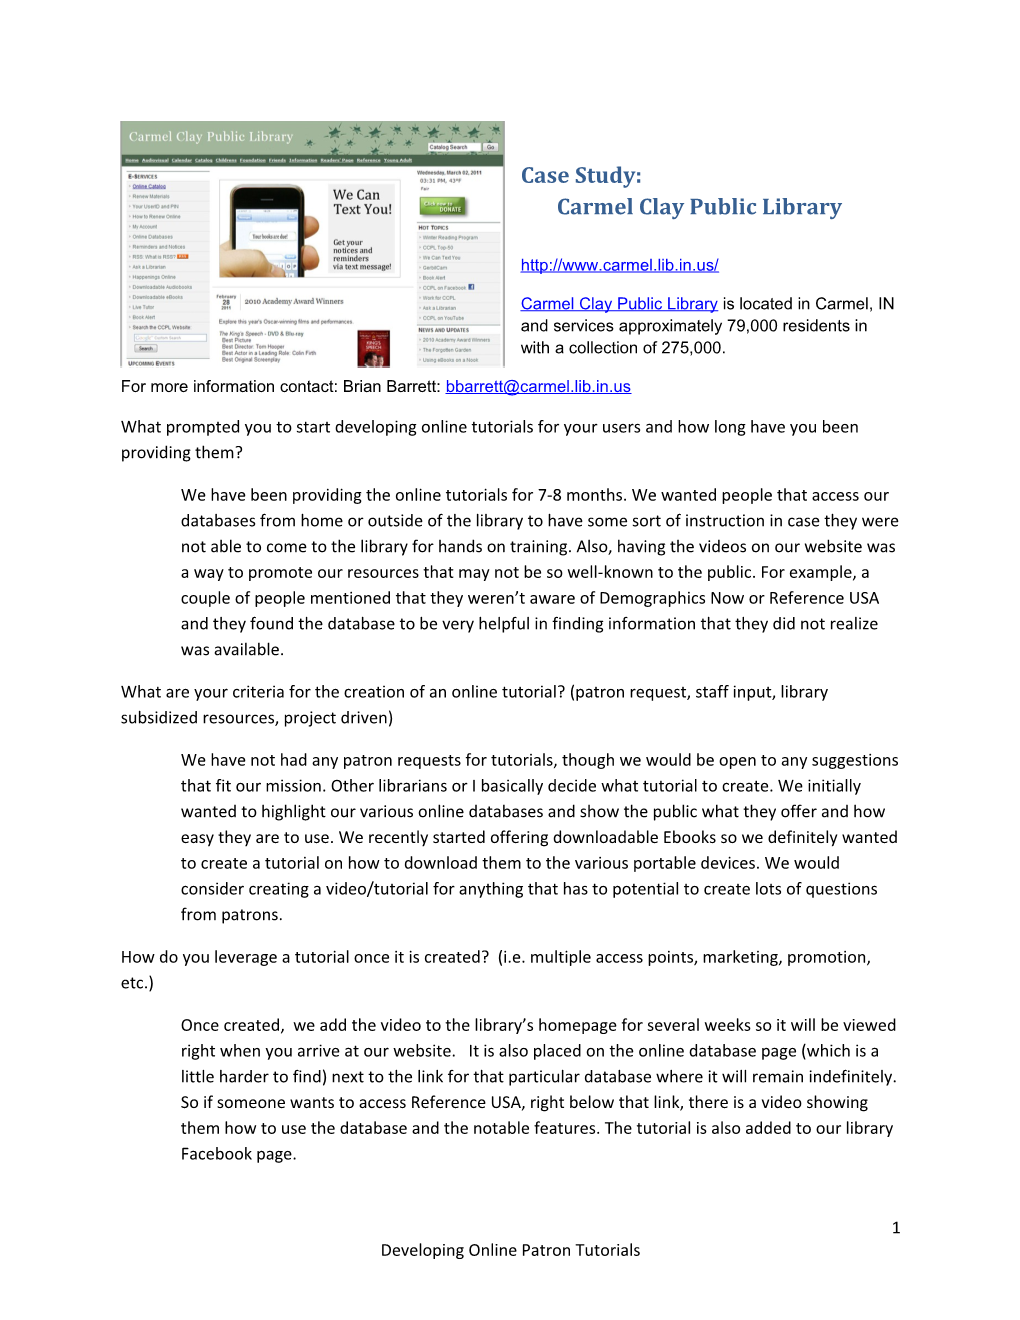 Case Study: Carmel Clay Public Library